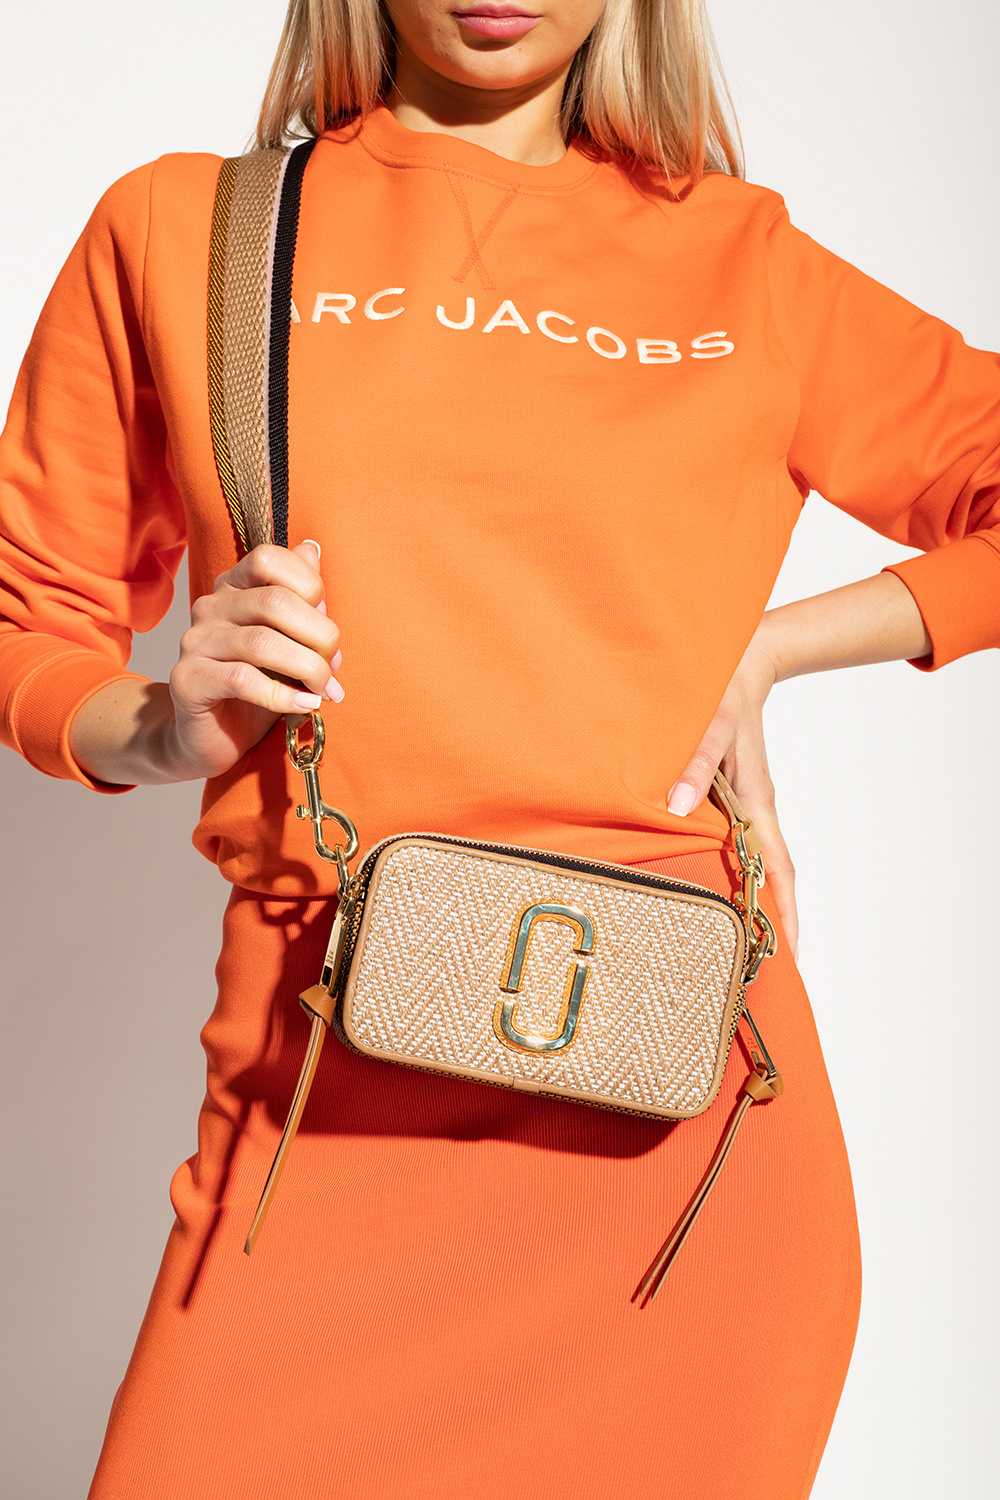 Marc Jacobs Snapshot Faux Shearling Crossbody Bag - Beige